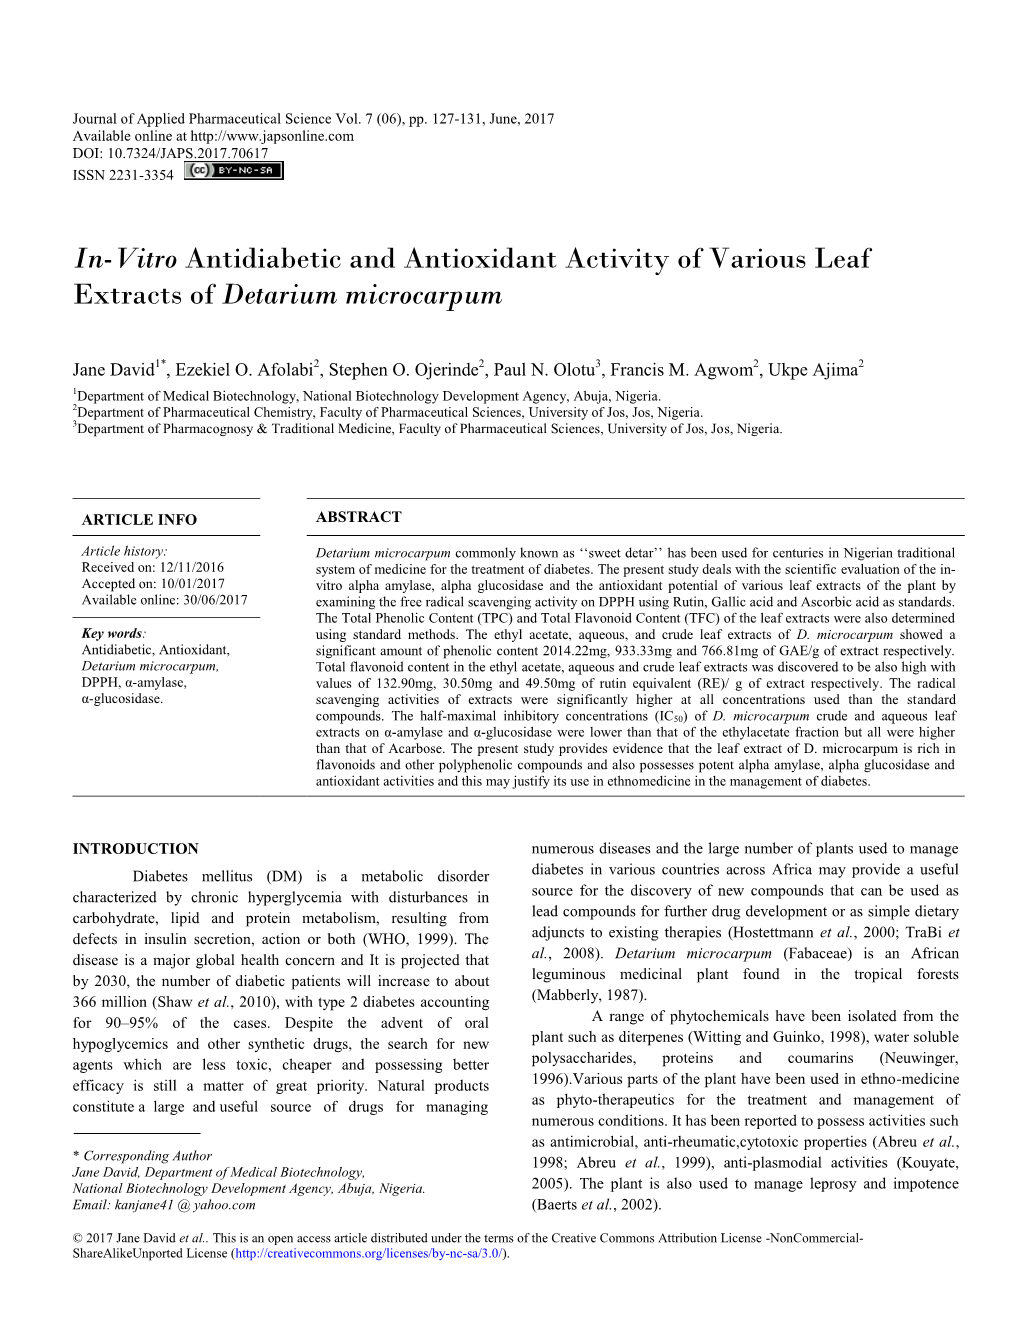 In-Vitro Antidiabetic and Antioxidant Activity of Various Leaf Extracts of Detarium Microcarpum